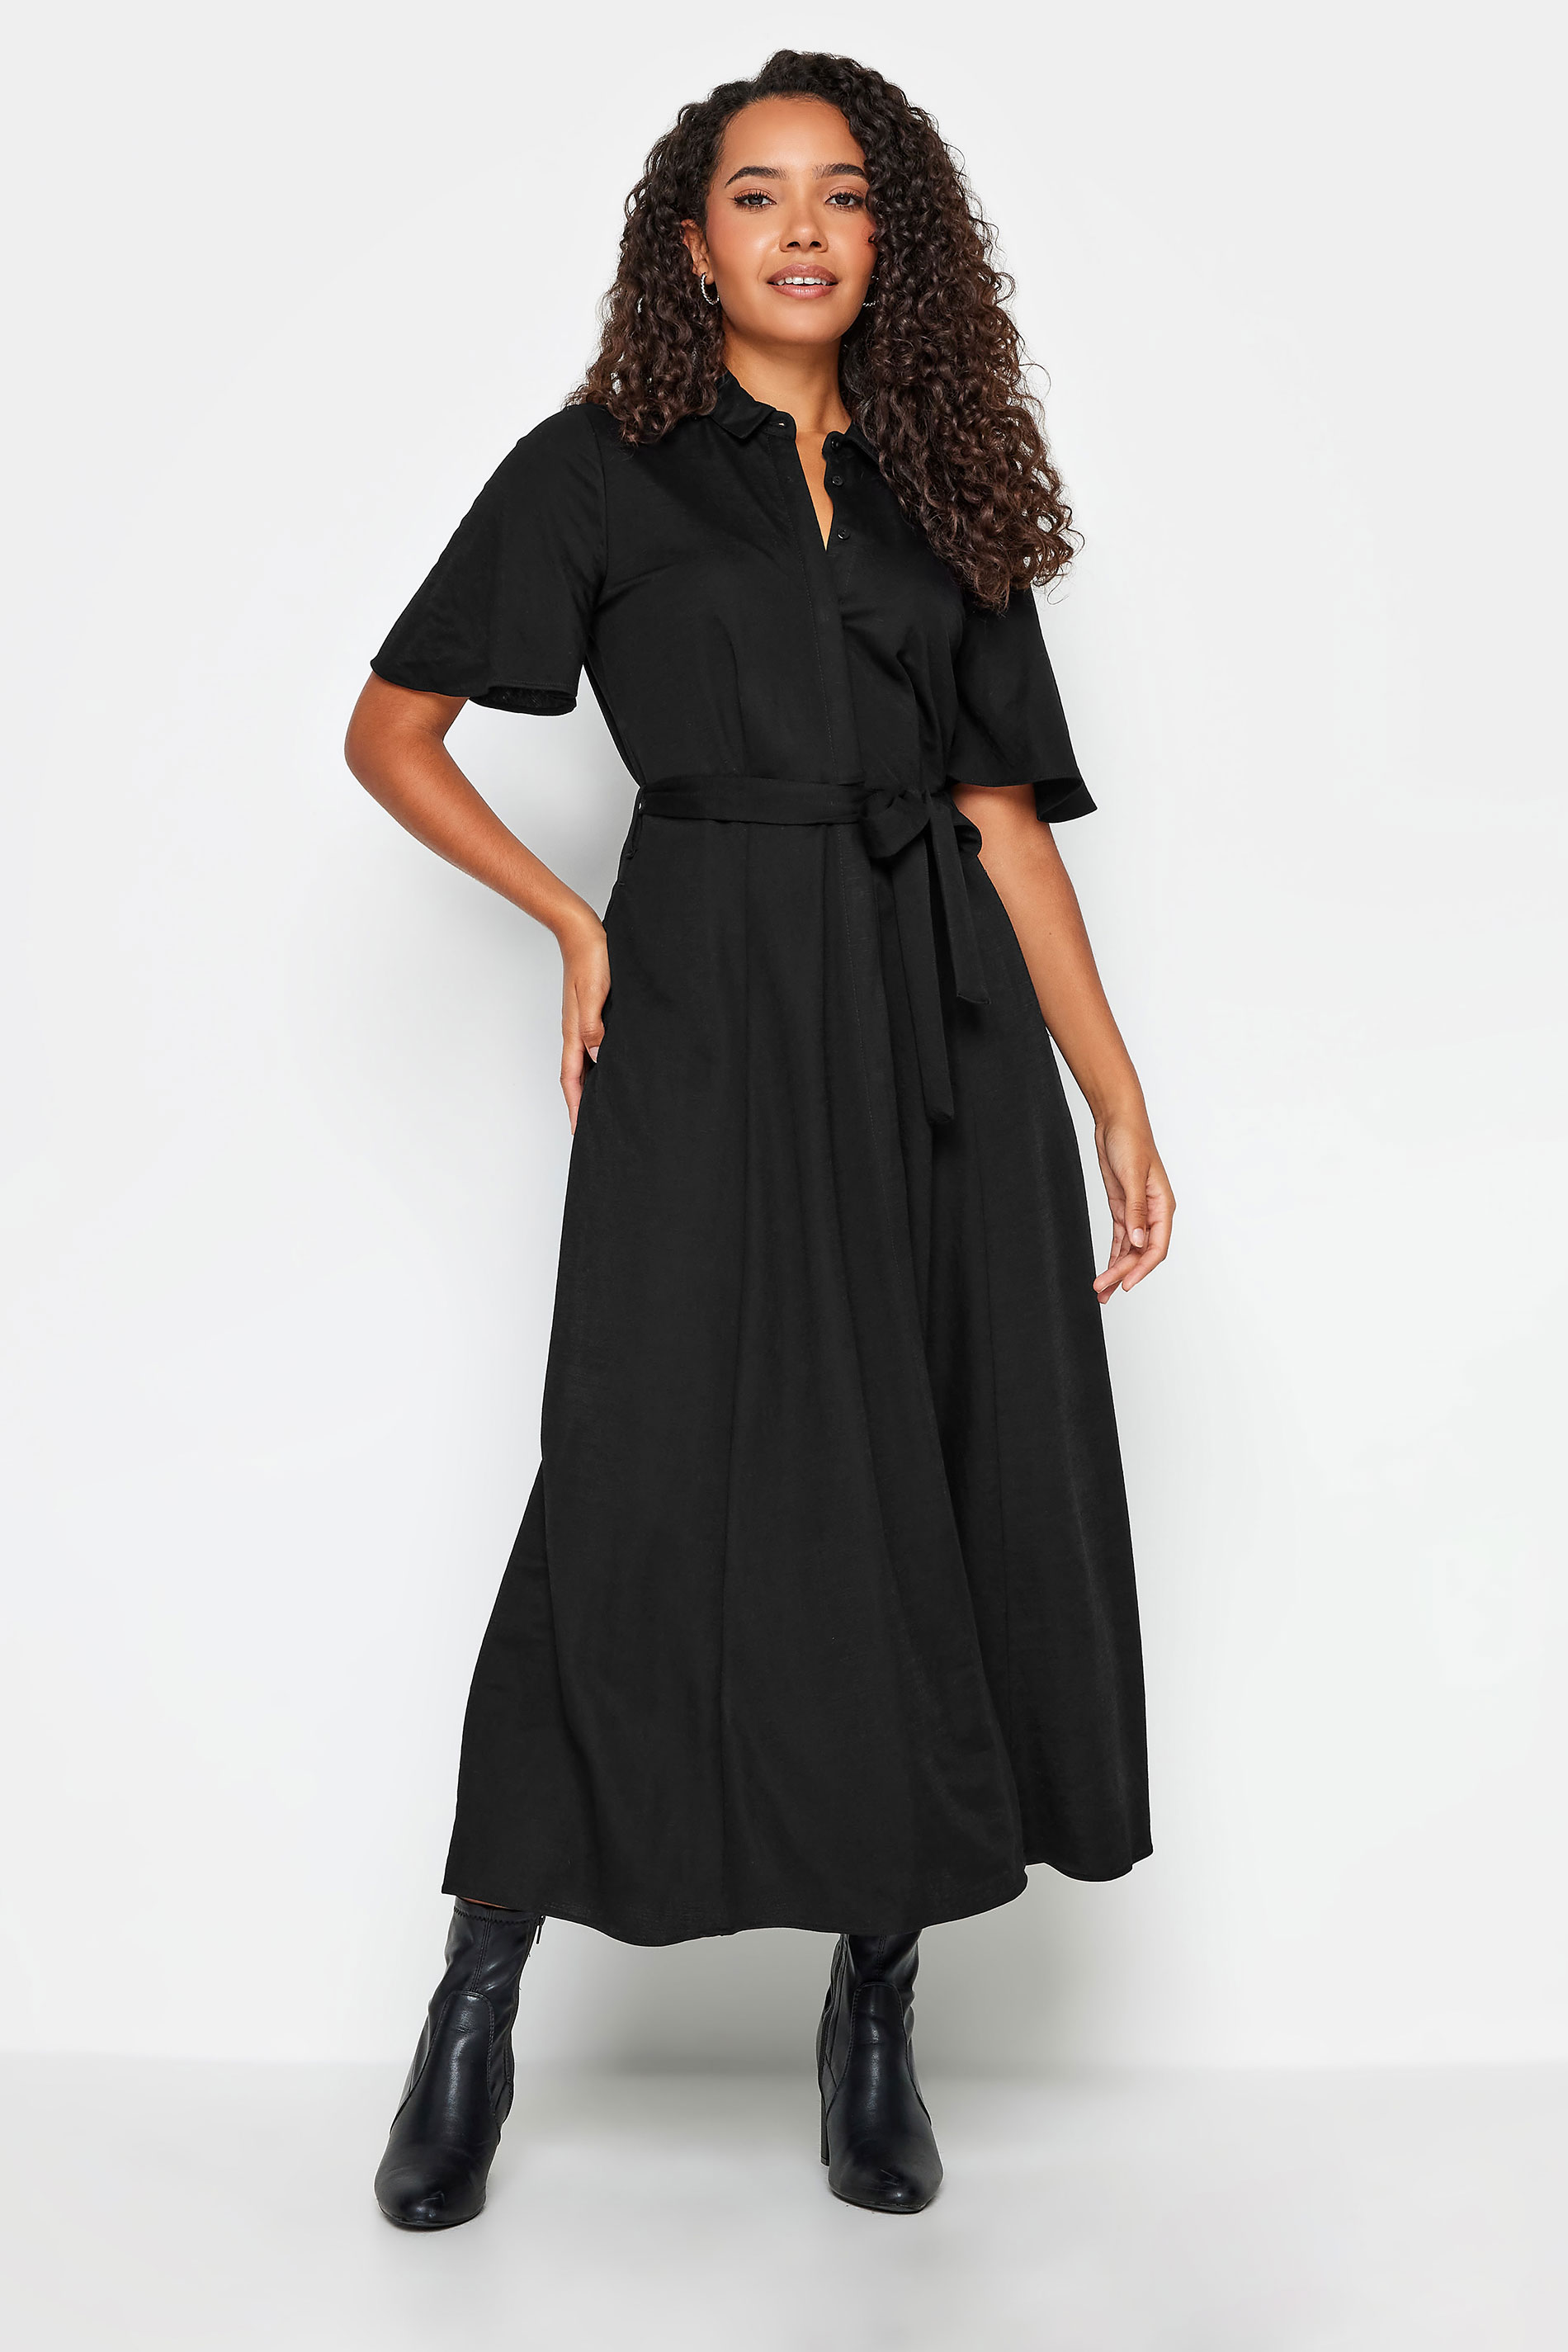 M&Co Black Button Through Collared Midaxi Dress | M&Co 2